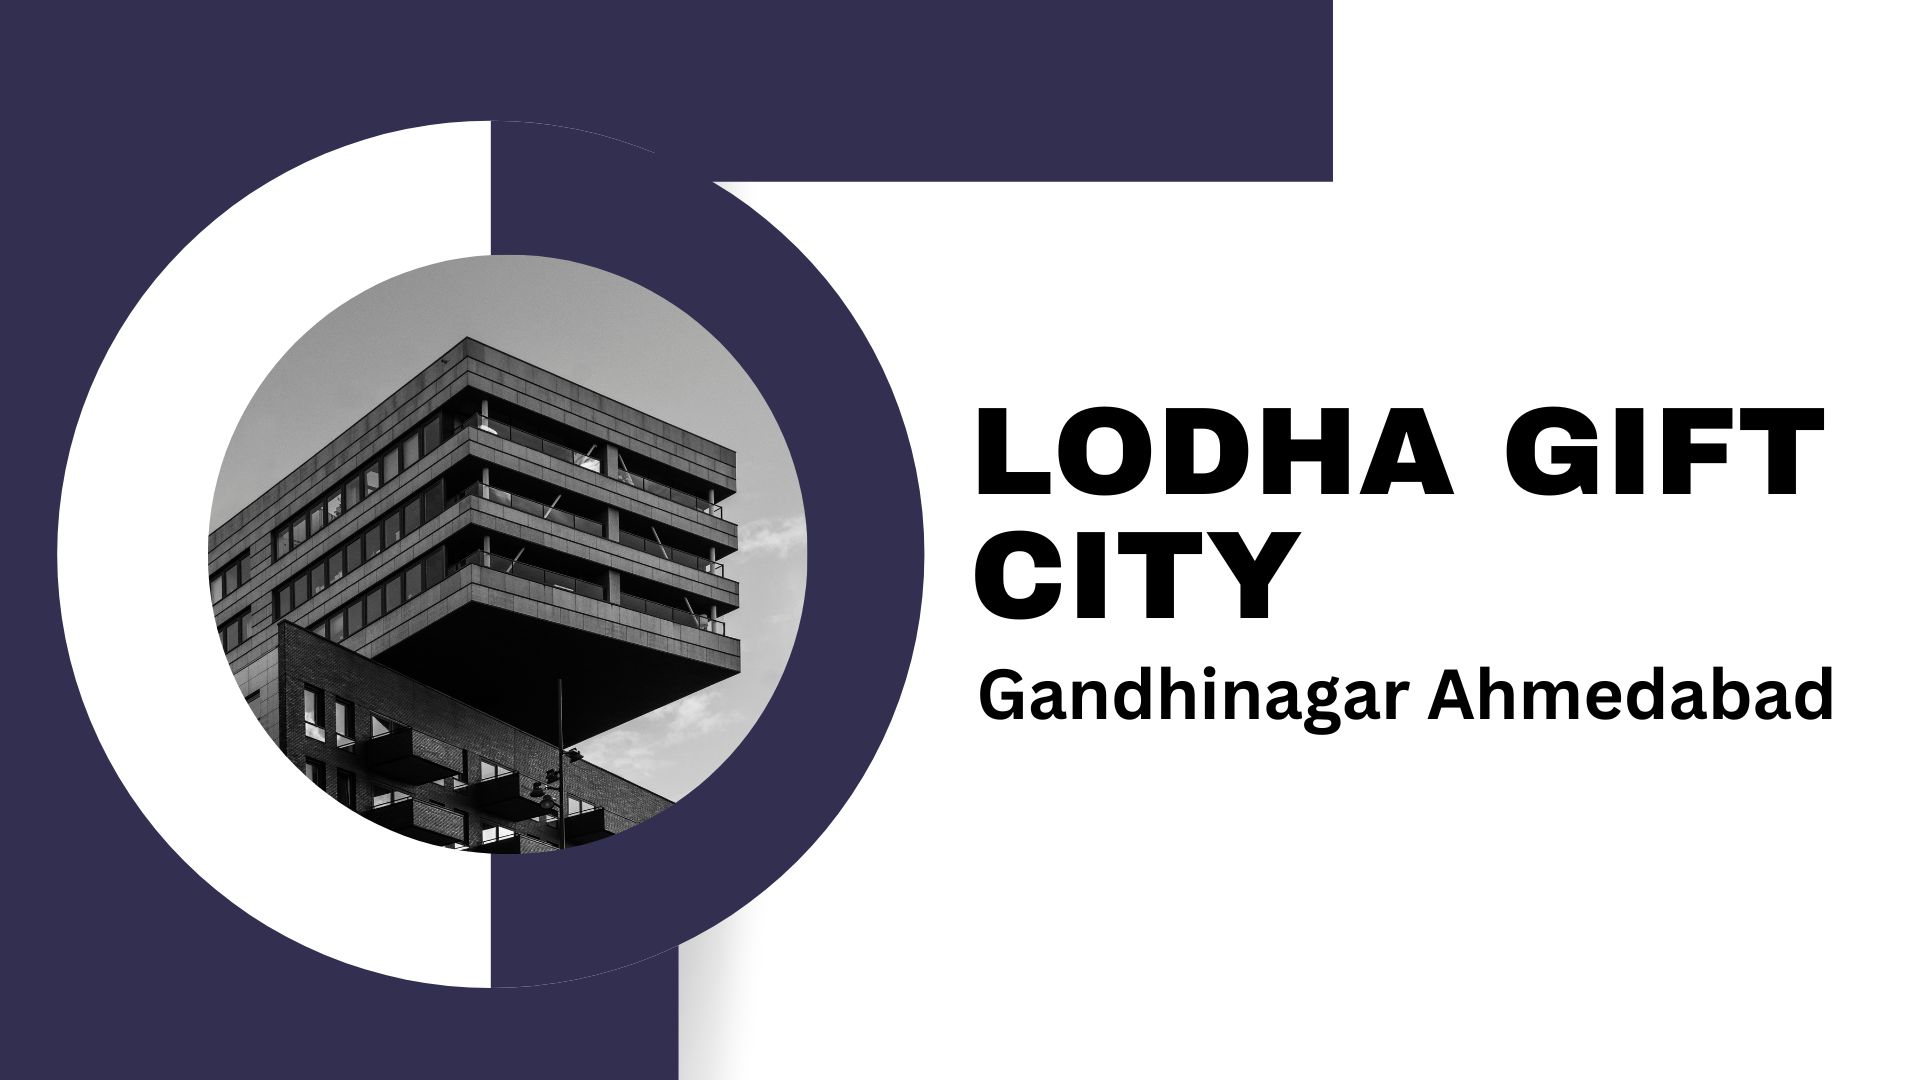 Lodha Gift City Gandhinagar